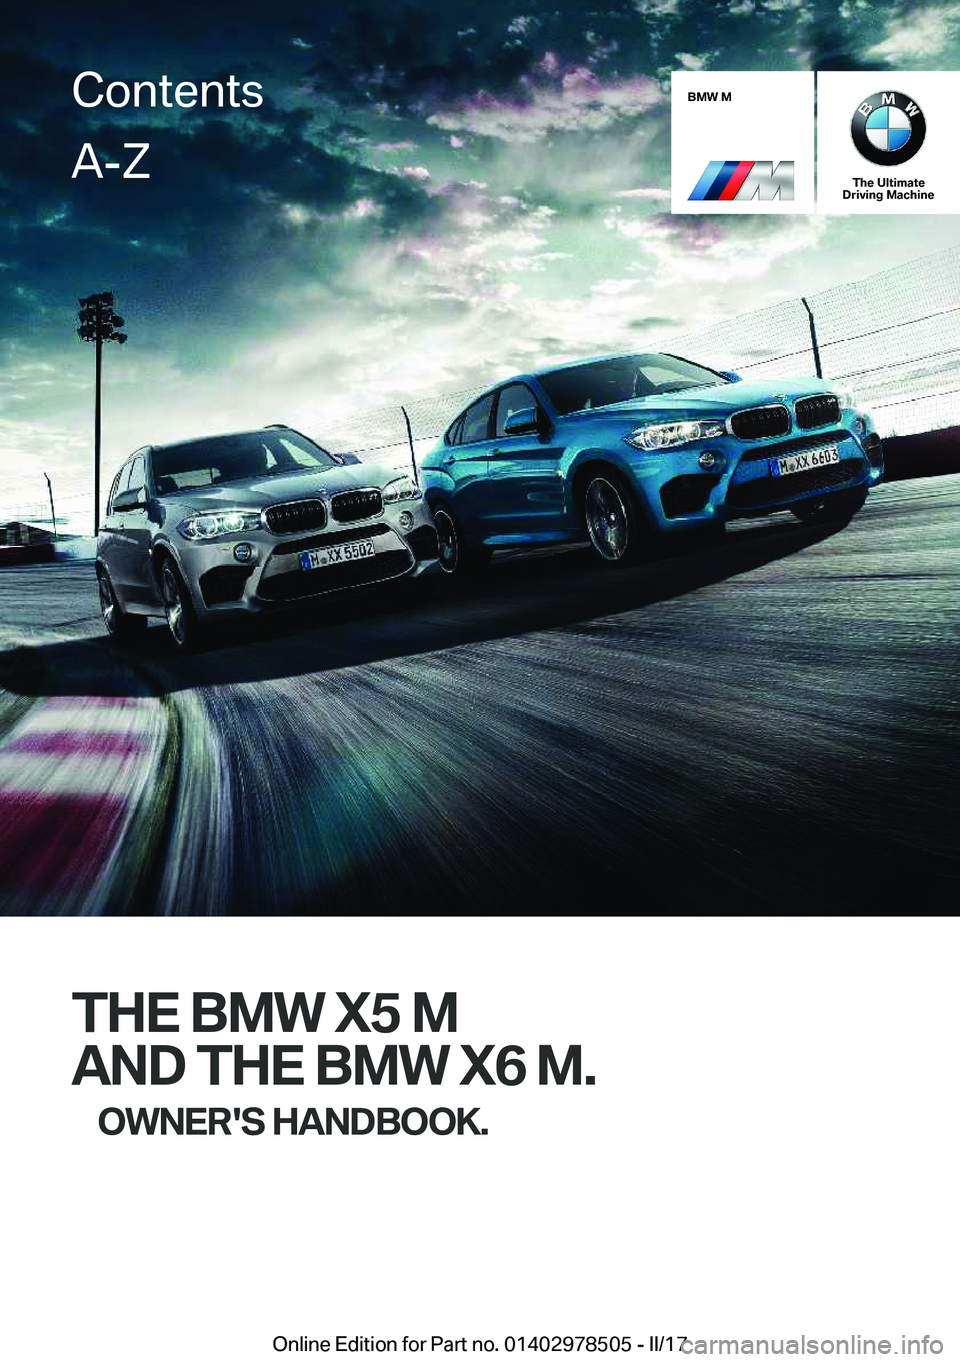 BMW X6 M 2017  Owners Manual �B�M�W��M
�T�h�e��U�l�t�i�m�a�t�e
�D�r�i�v�i�n�g��M�a�c�h�i�n�e
�T�H�E��B�M�W��X�5��M
�A�N�D��T�H�E��B�M�W��X�6��M�. �O�W�N�E�R��S��H�A�N�D�B�O�O�K�.
�C�o�n�t�e�n�t�s�A�-�Z
�O�n�l�i�n�e� �